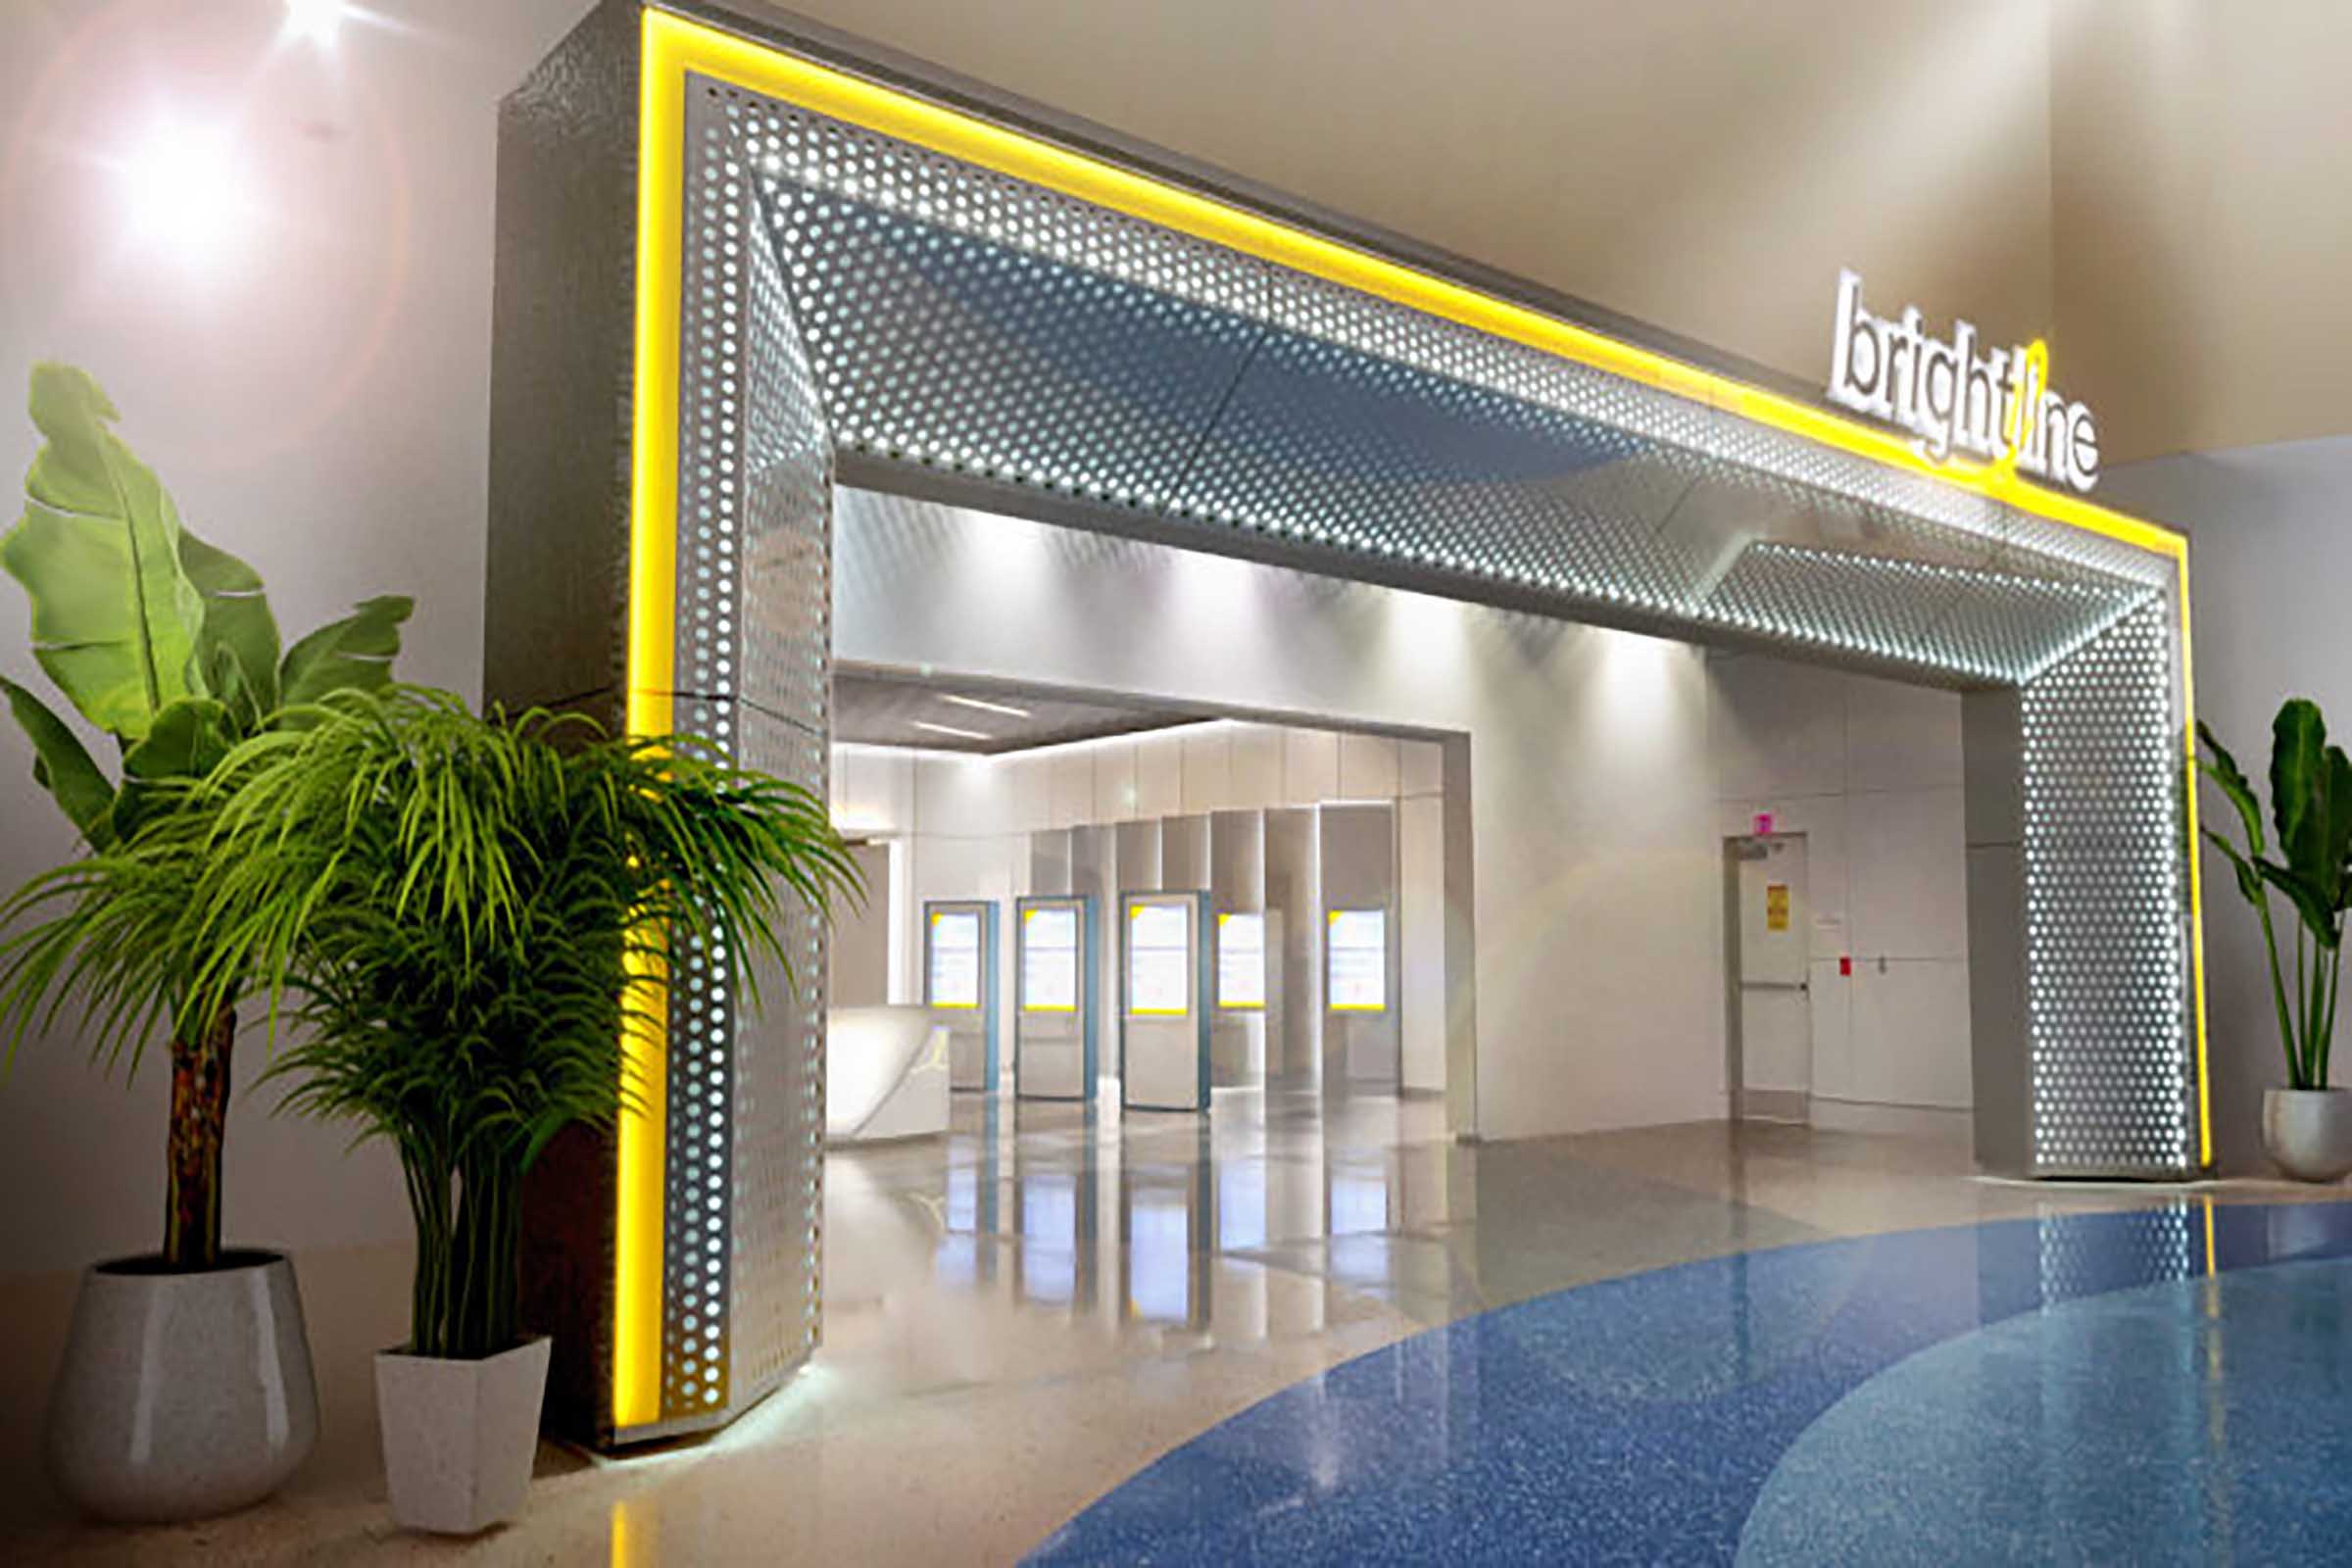 Brightline Reveals Luxurious New Station At Orlando International Airport